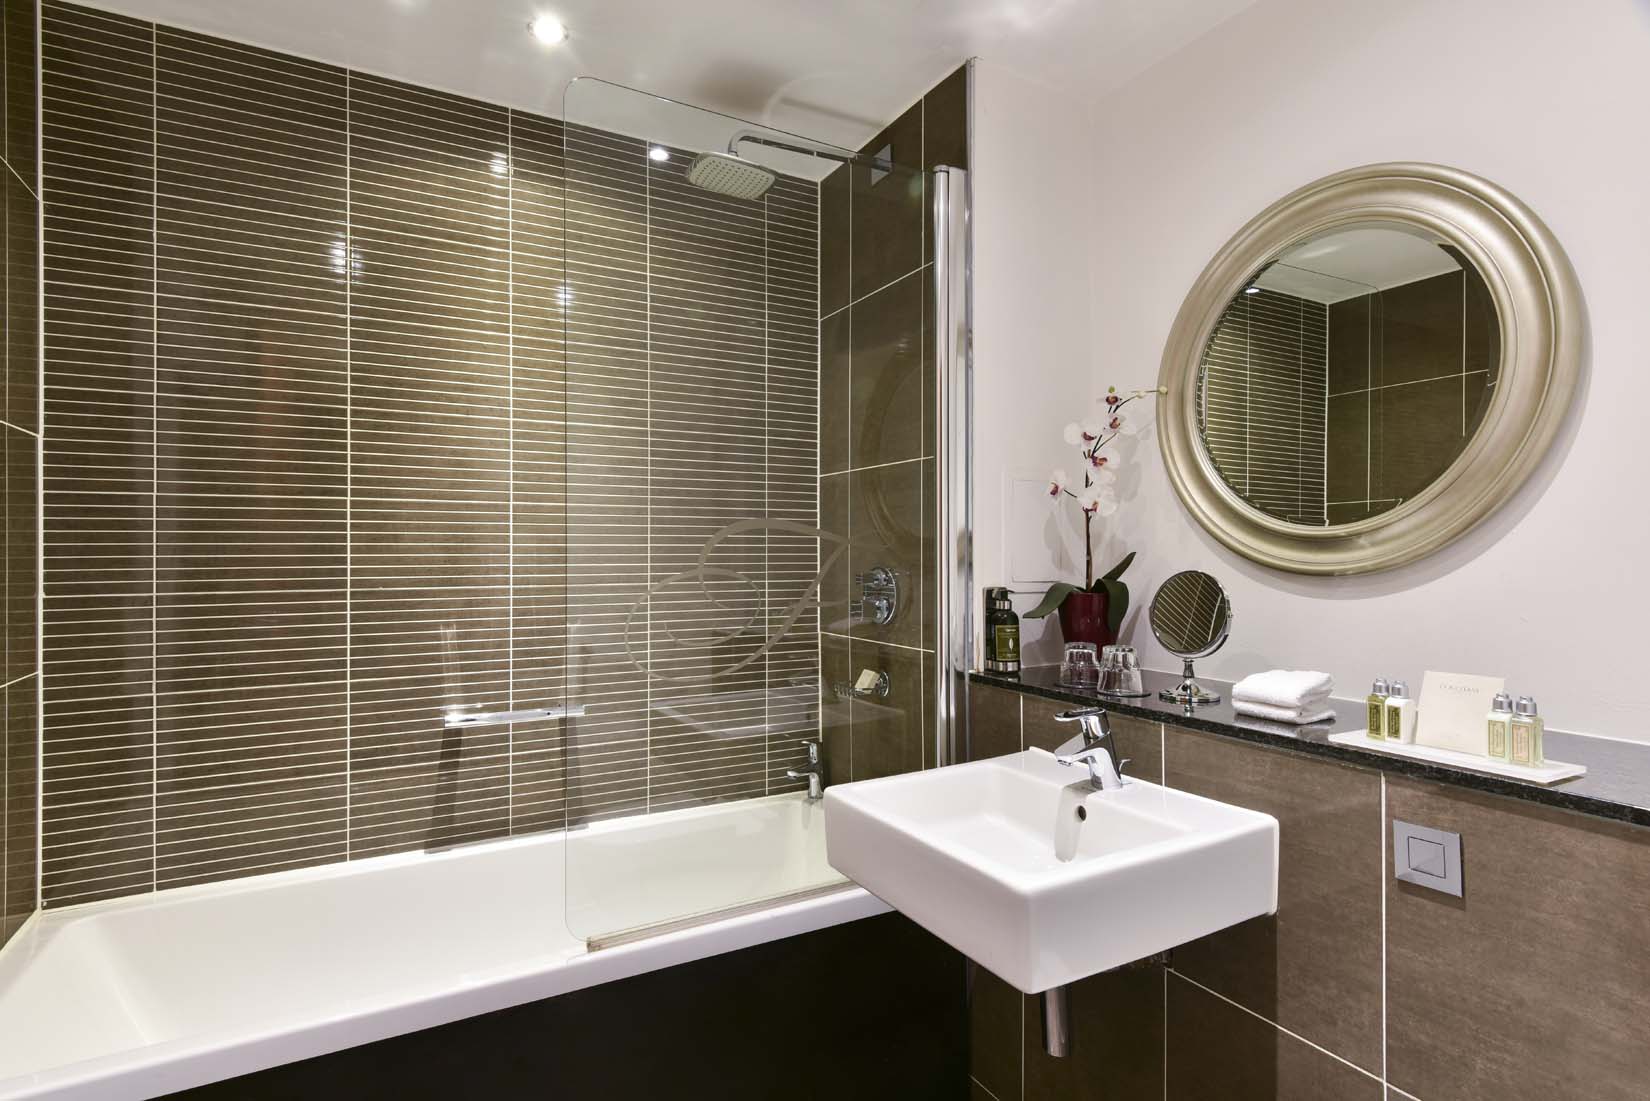 studio executive apartments rooms glasgow bathroom with bathtub